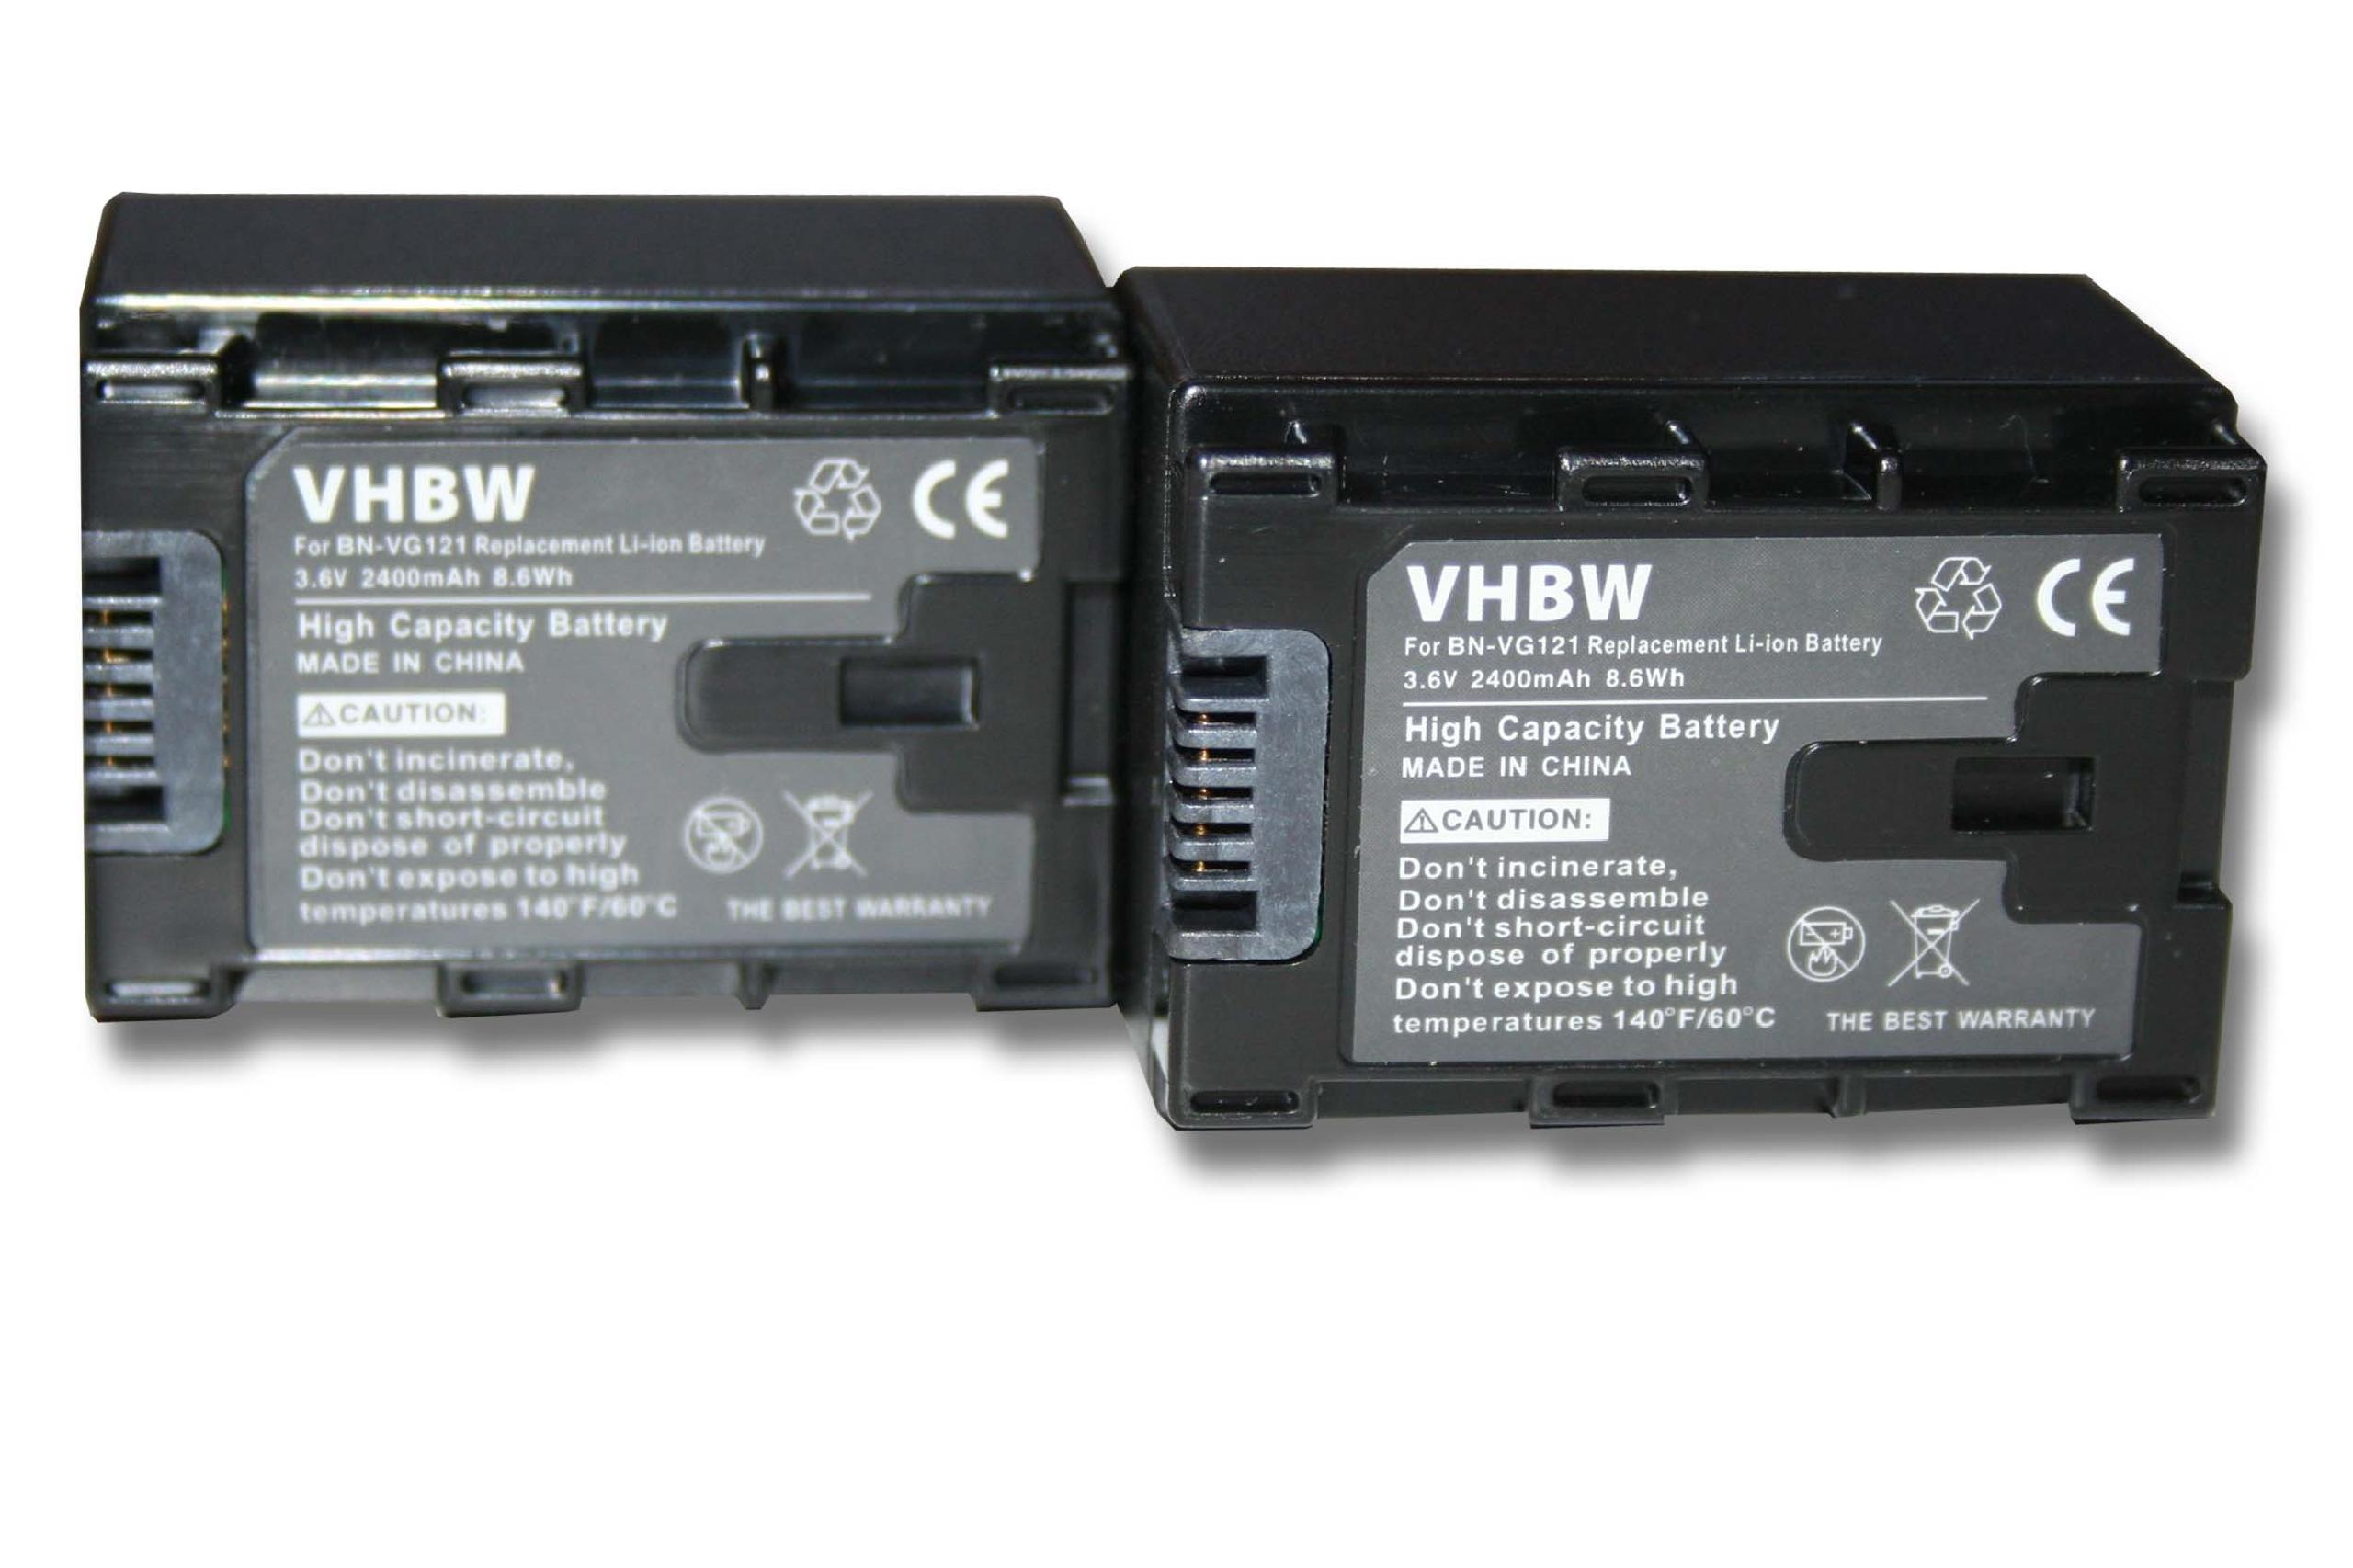 kompatibel Volt, 3.6 JVC GZ-HD750, - GZ-HM30 Li-Ion mit 2400 VHBW Akku GZ-HD760, Videokamera, GZ-HM300BU, GZ-HM300,